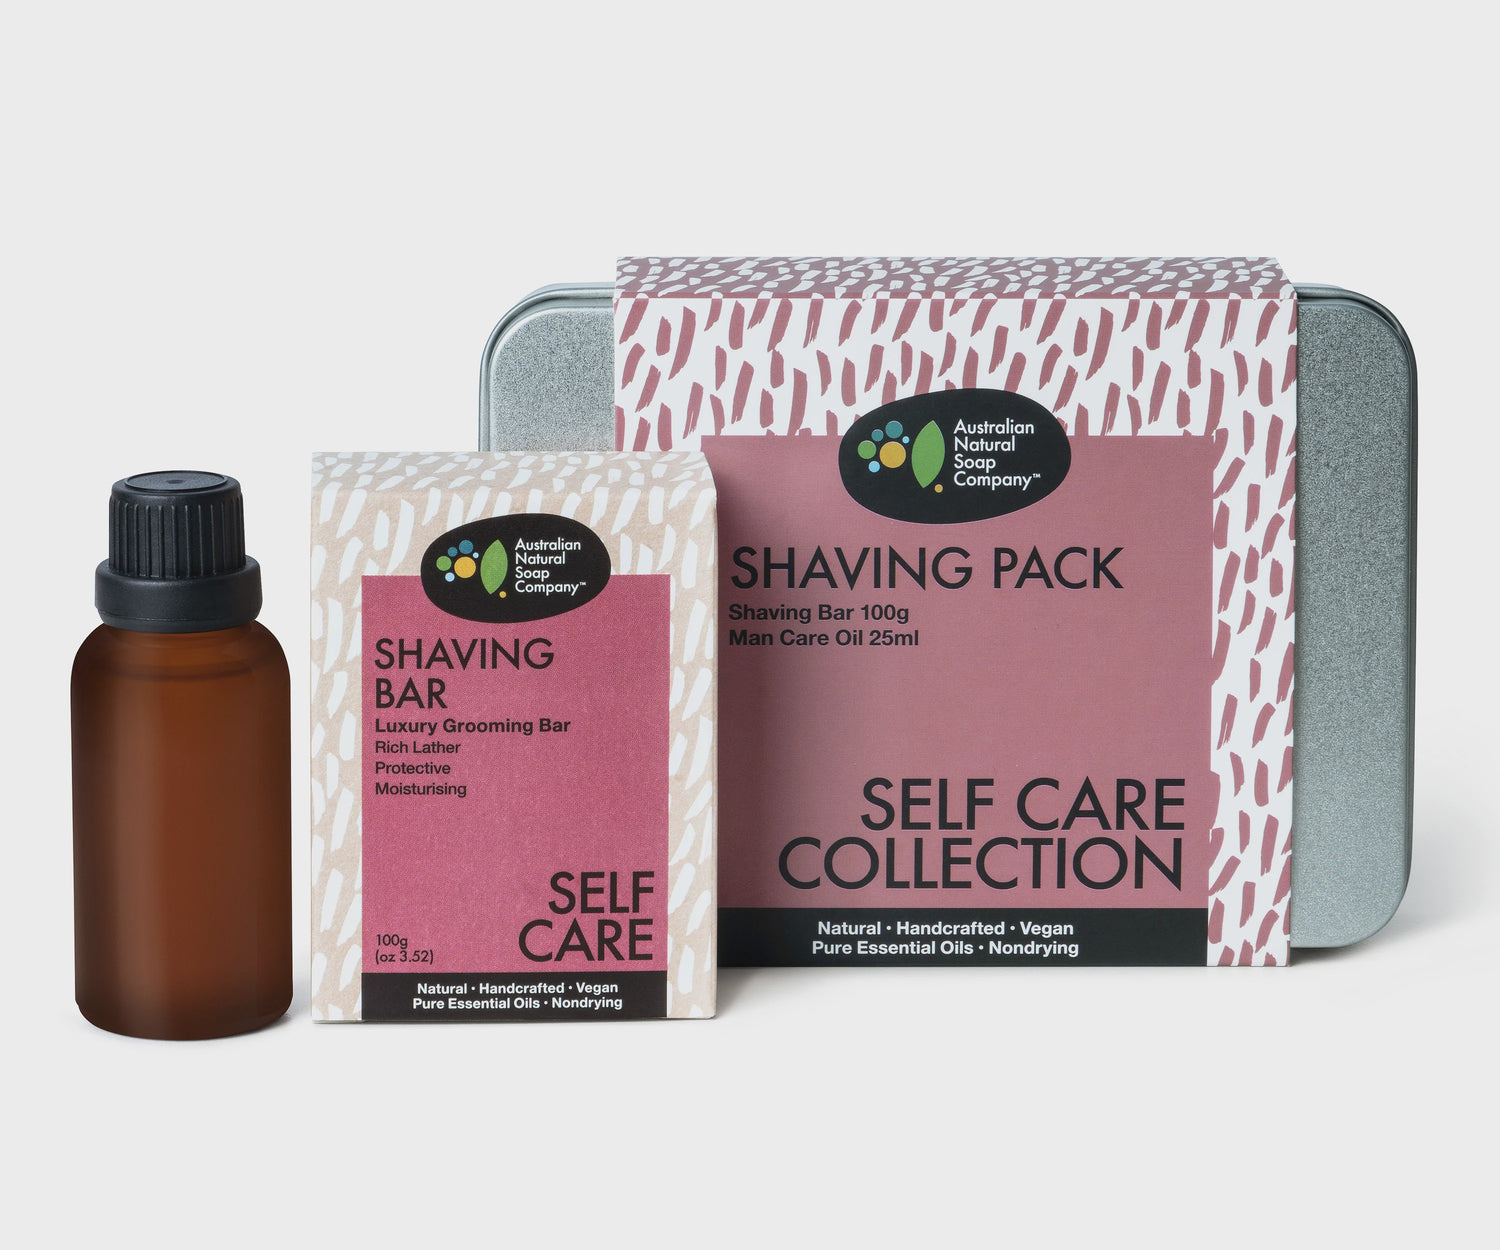 Australian Natural Soap Company Shaving Pack